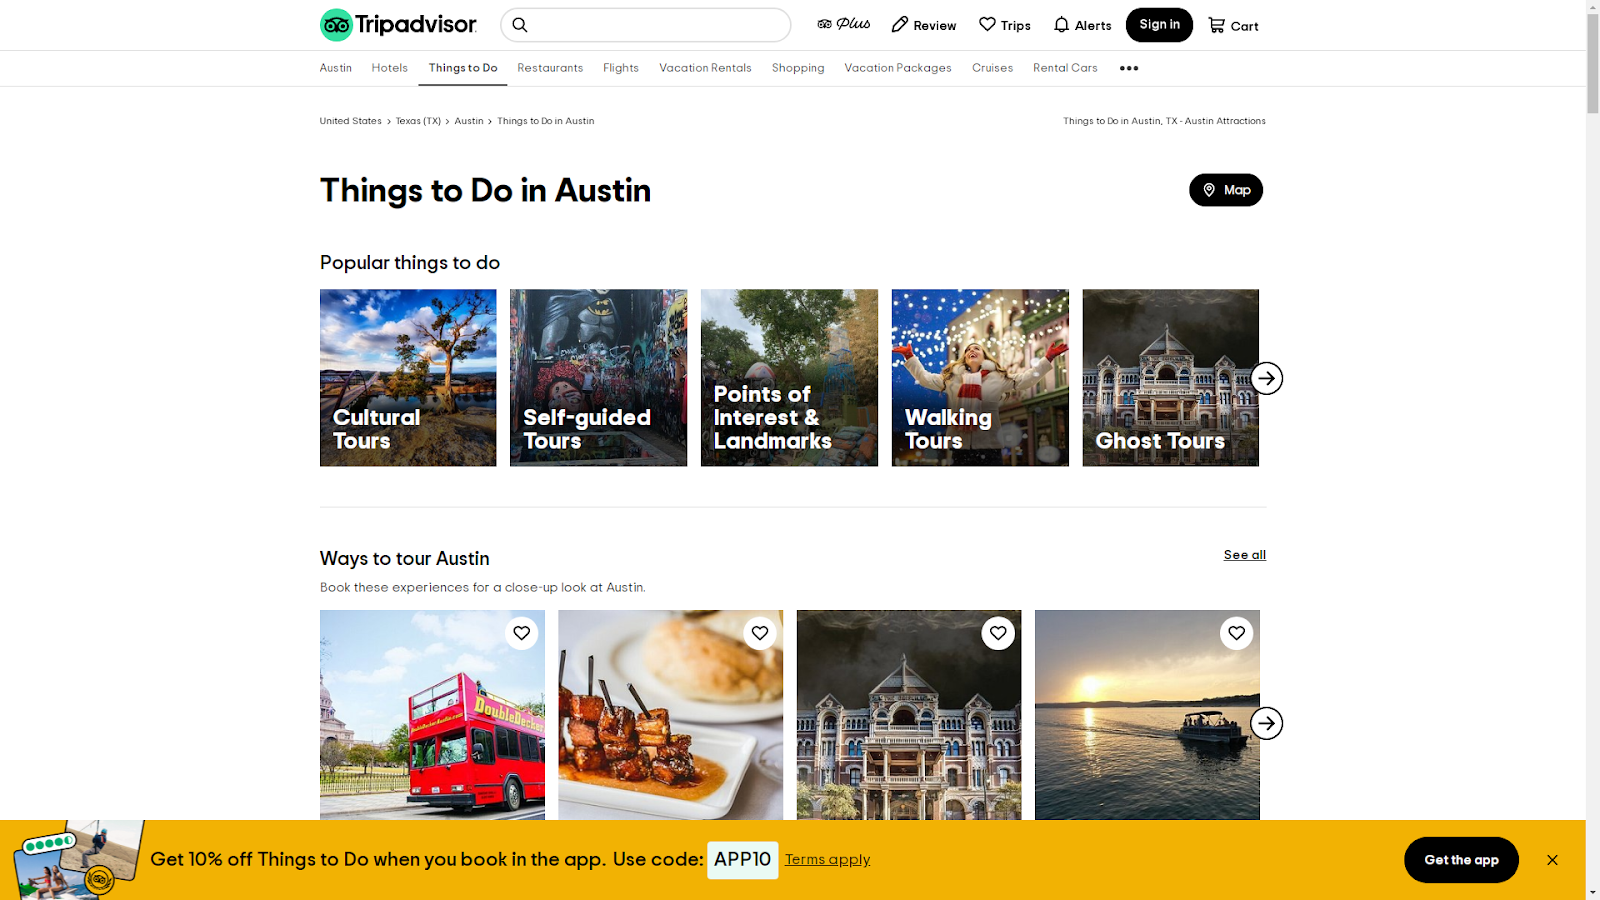 TripAdvisor "Things To Do in Austin" page screenshot